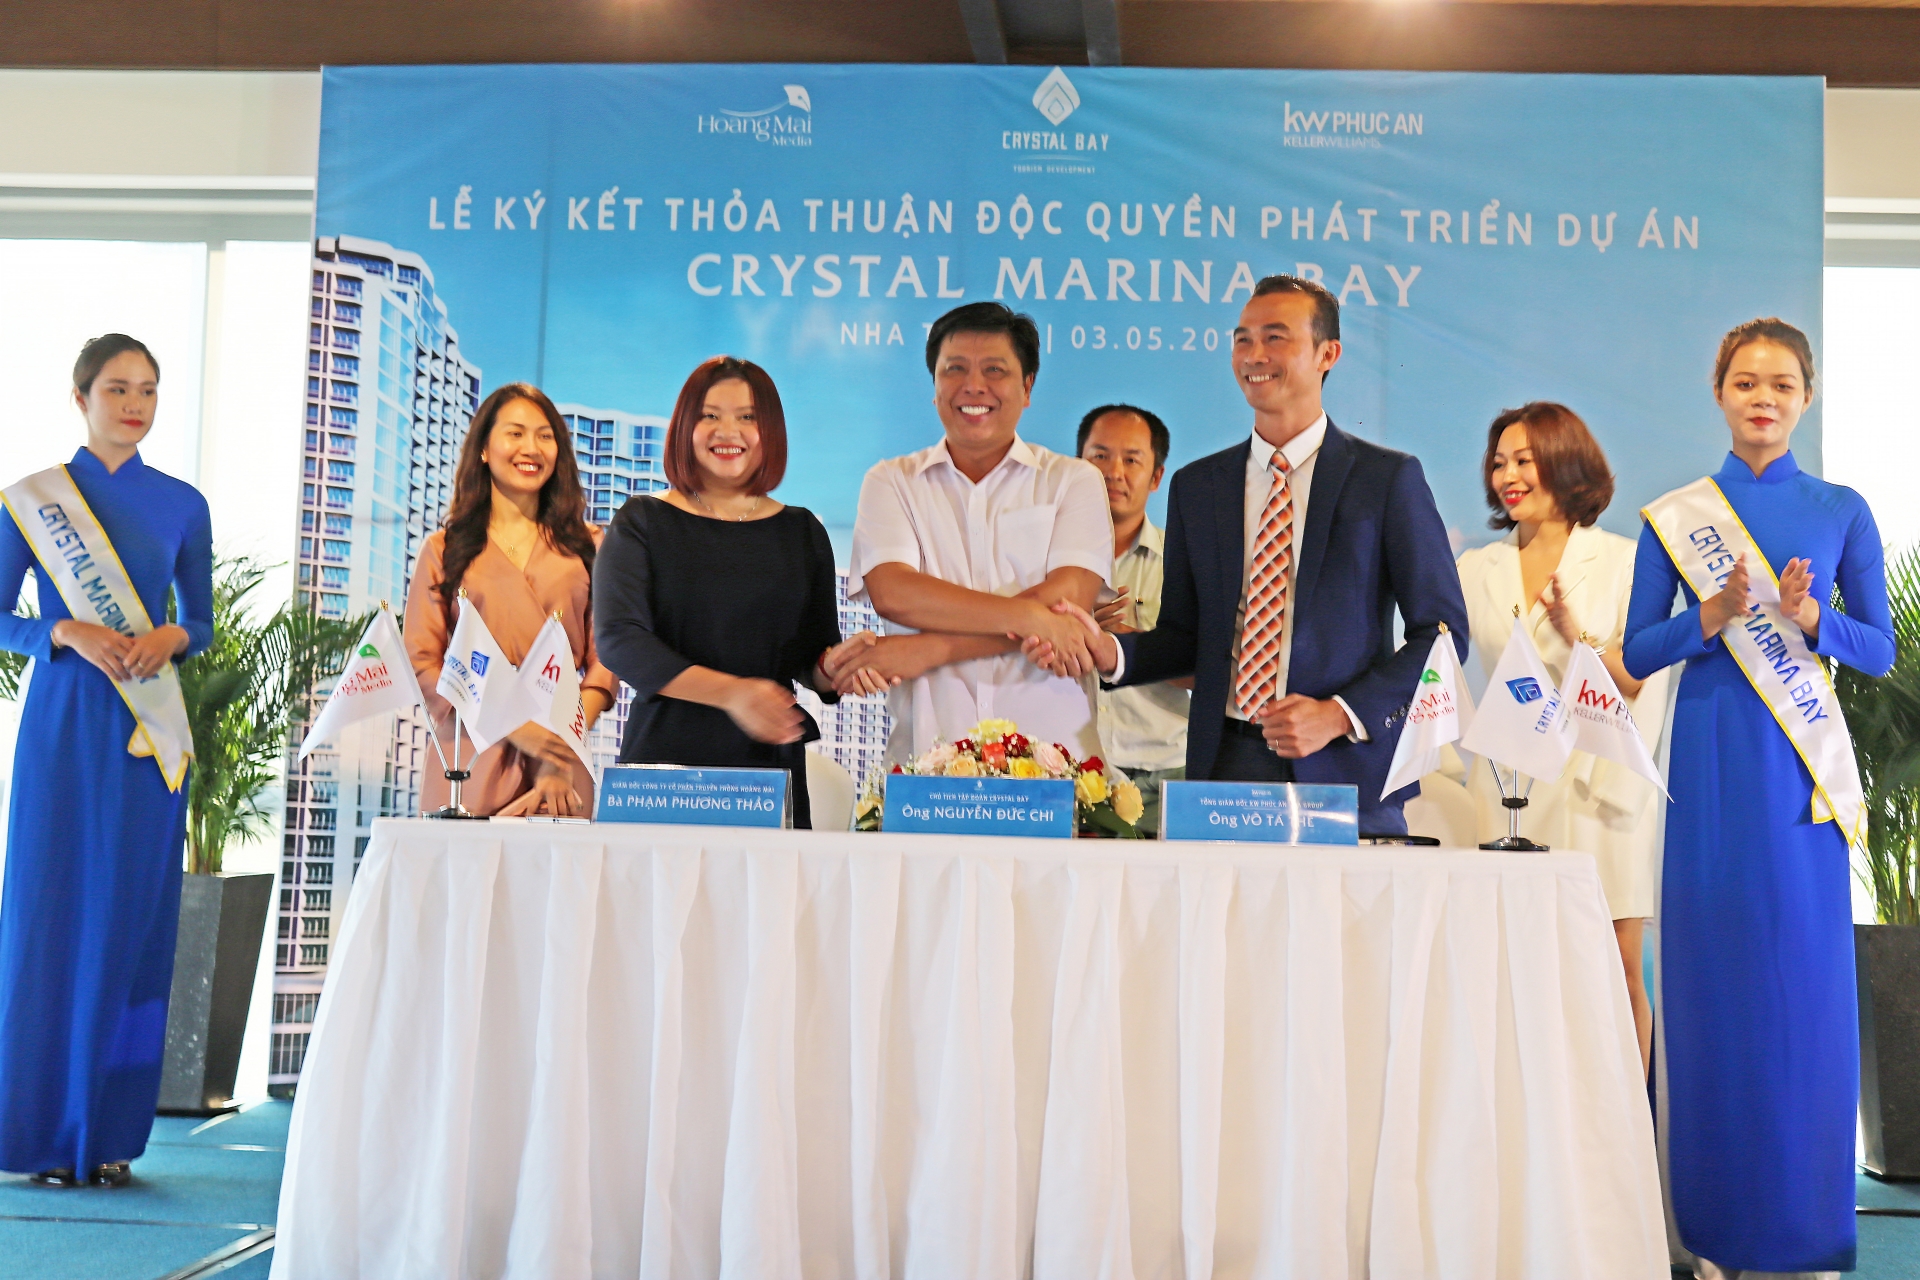 crystal bay ties up with kw phuc an and hoang mai media